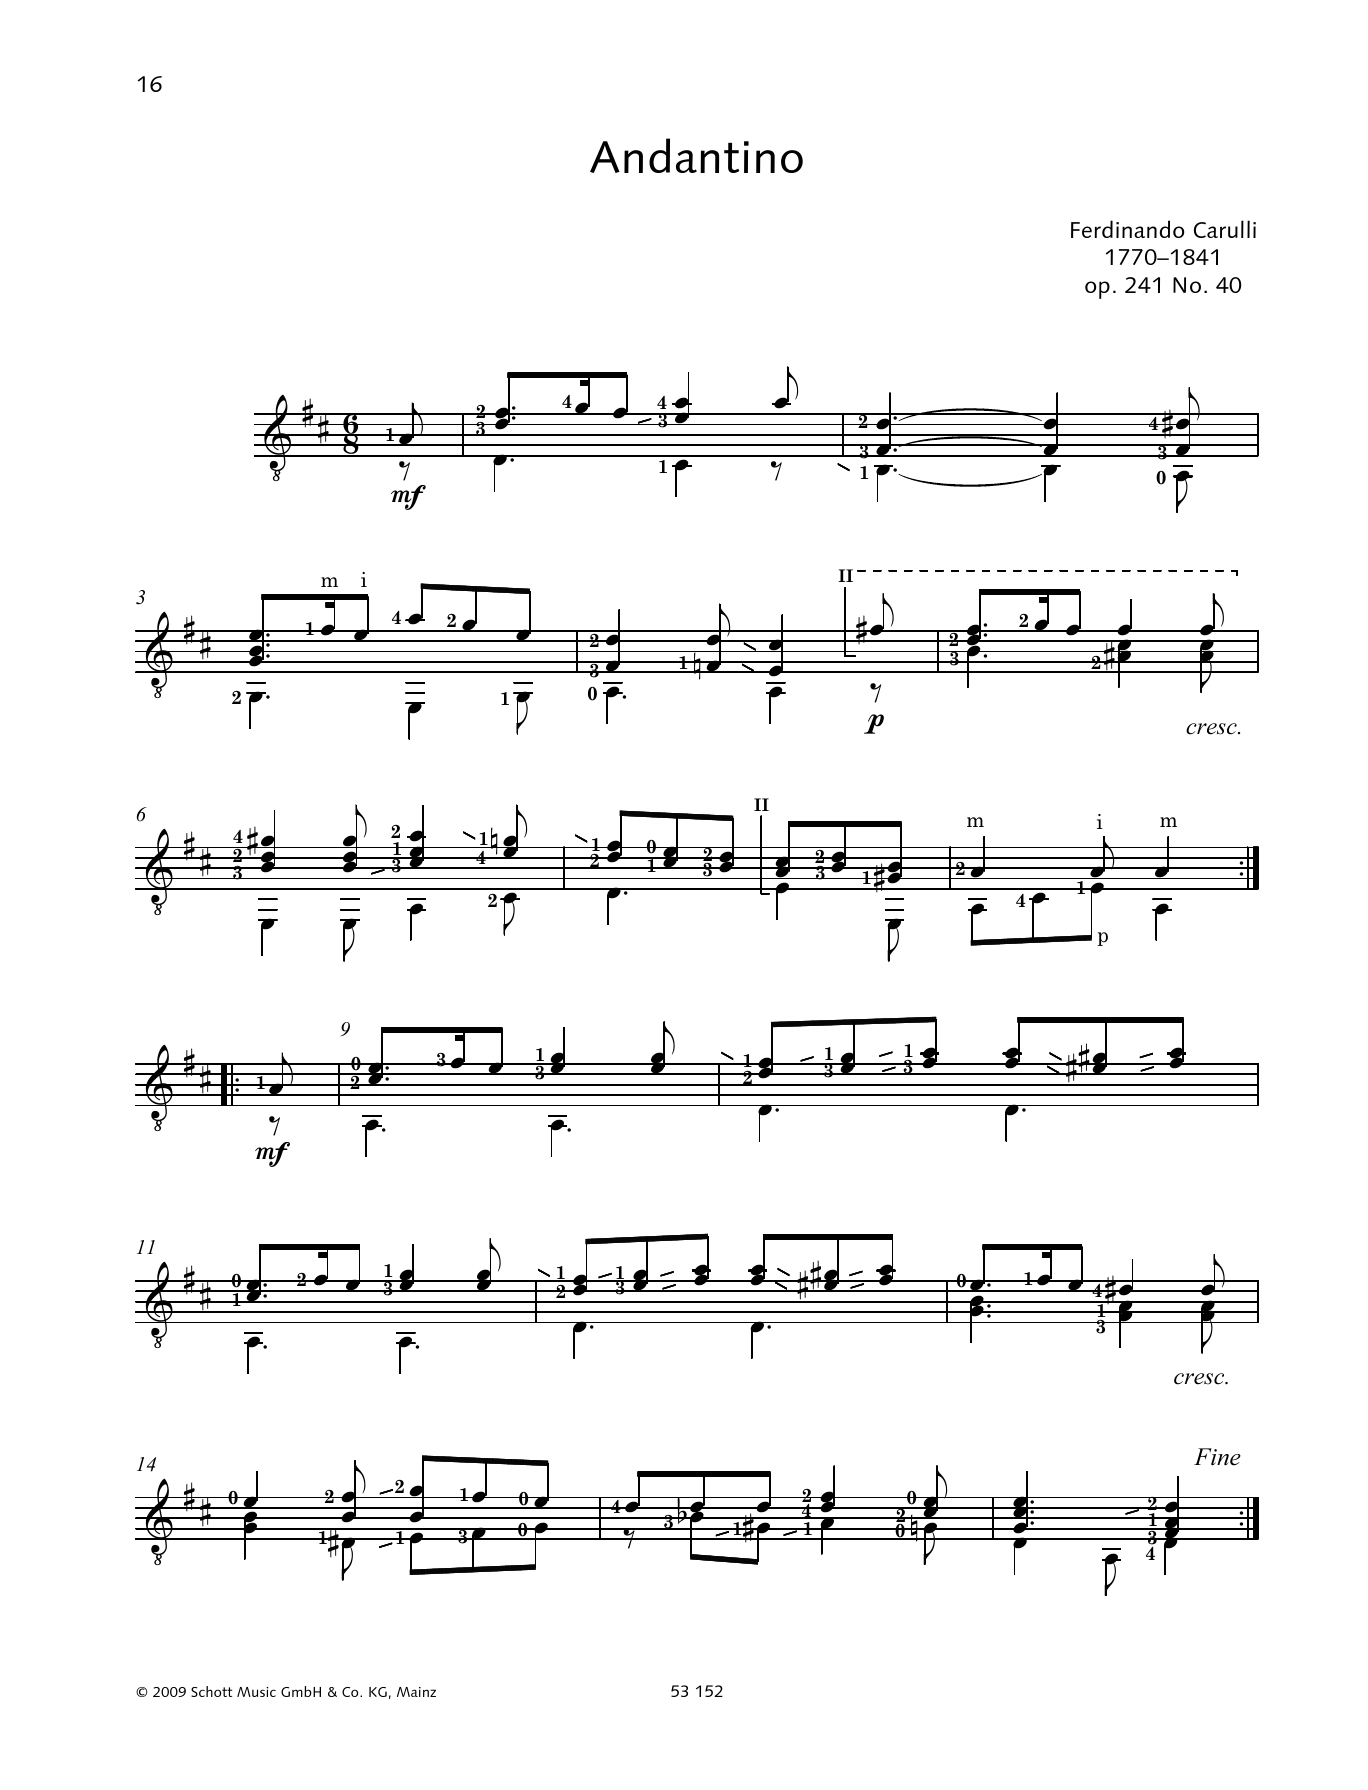 Ferdinando Carulli Andantino Sheet Music Notes & Chords for Solo Guitar - Download or Print PDF